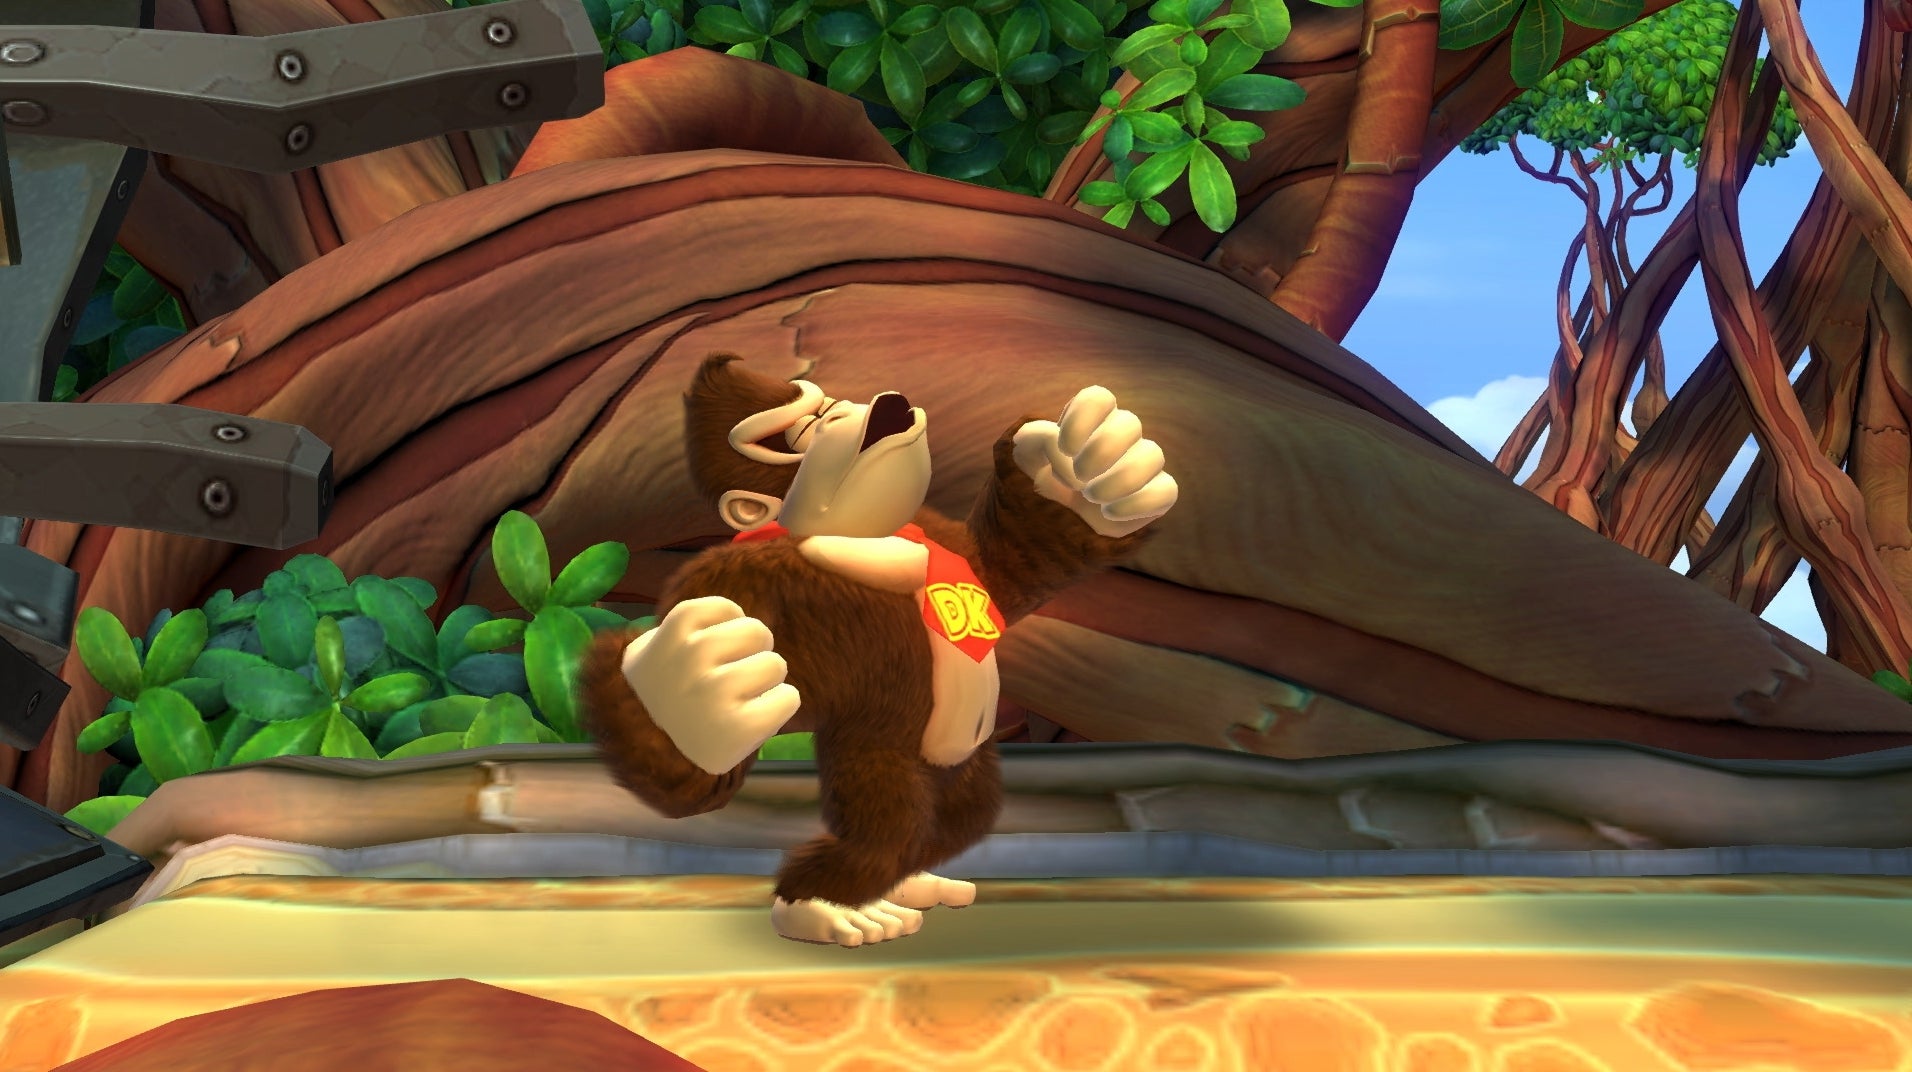 Immagine di Donkey Kong Country Tropical Freeze: un video mette a confronto le versioni Switch e Wii U